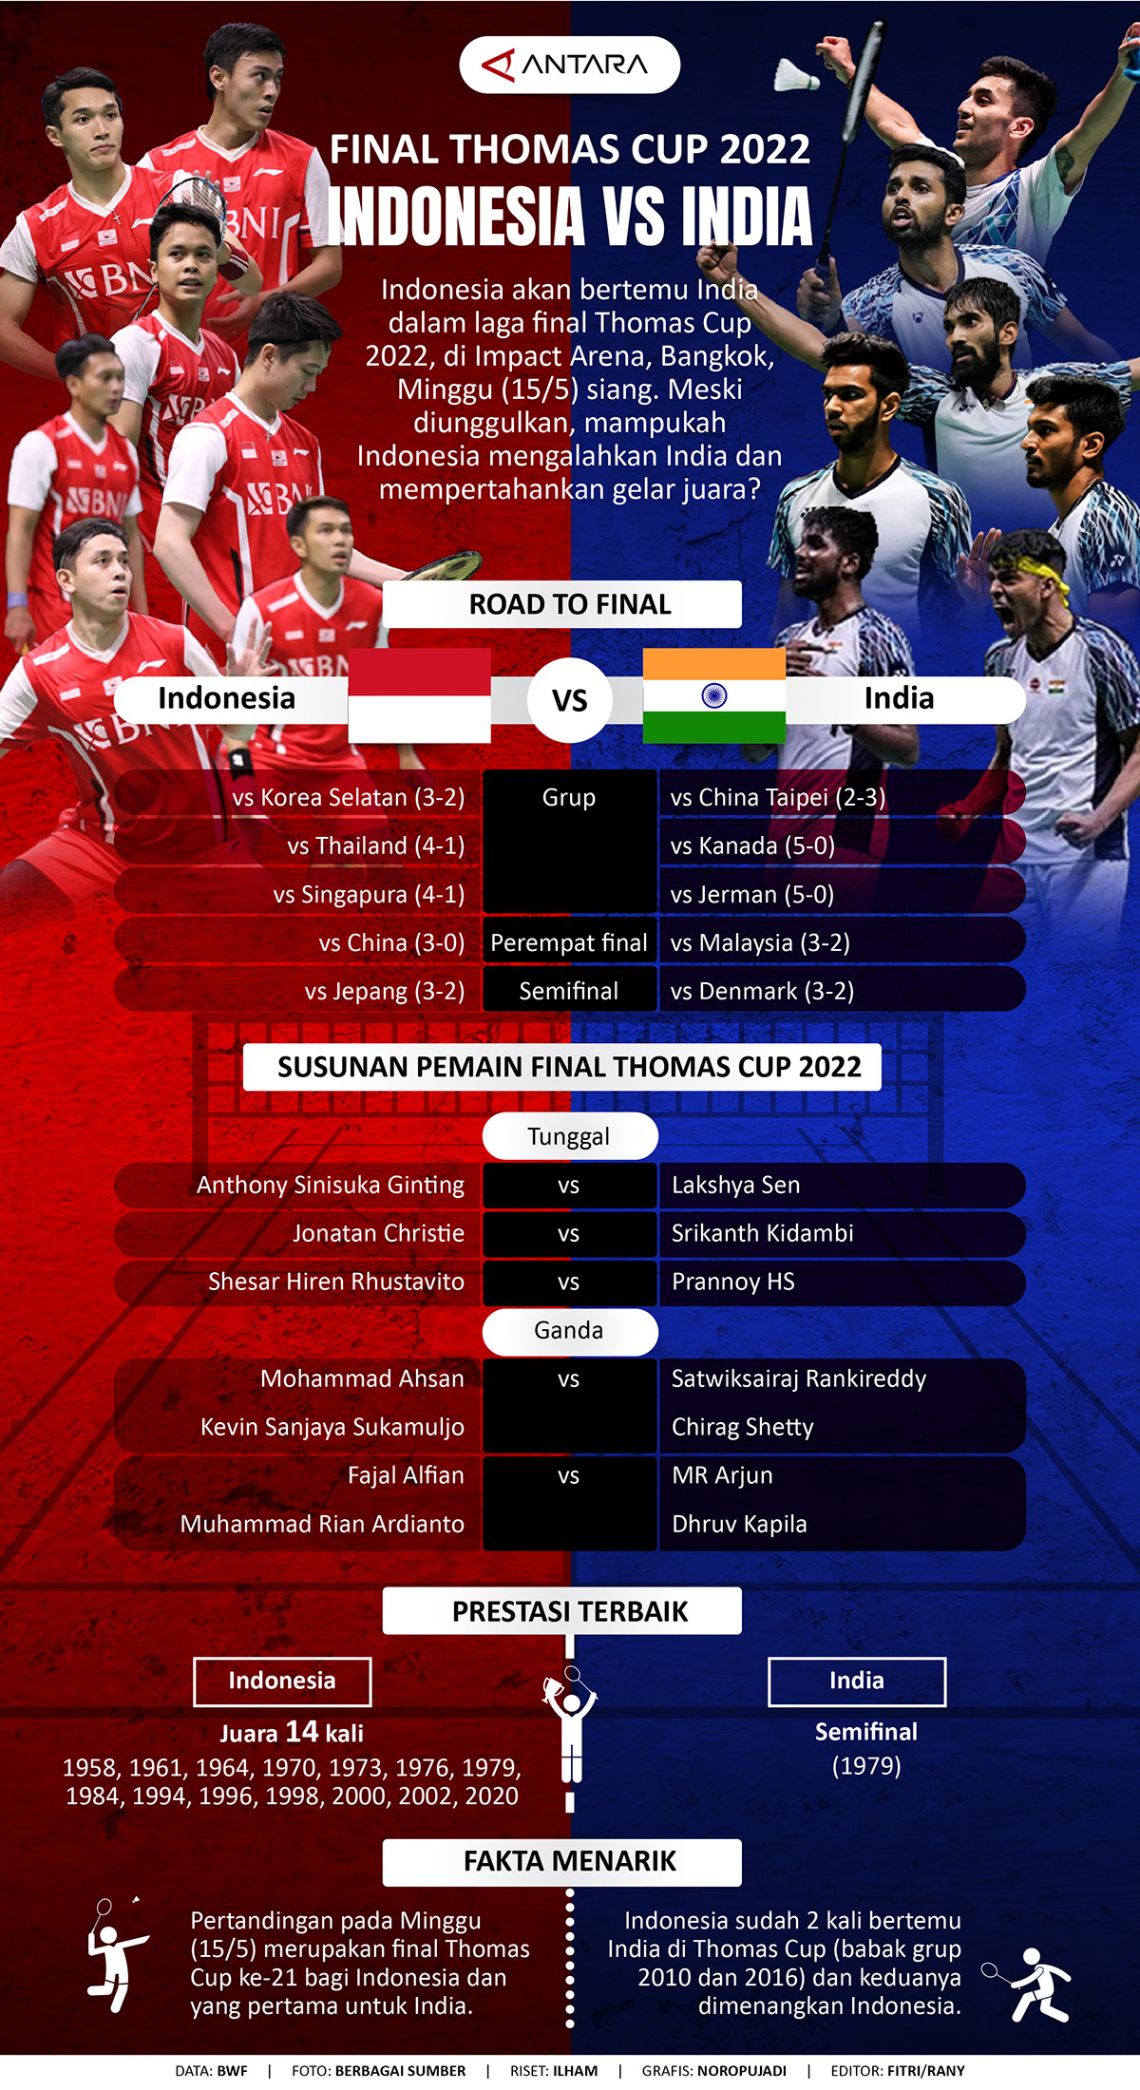 Final Thomas Cup 2022 Indonesia vs India Infografik ANTARA News